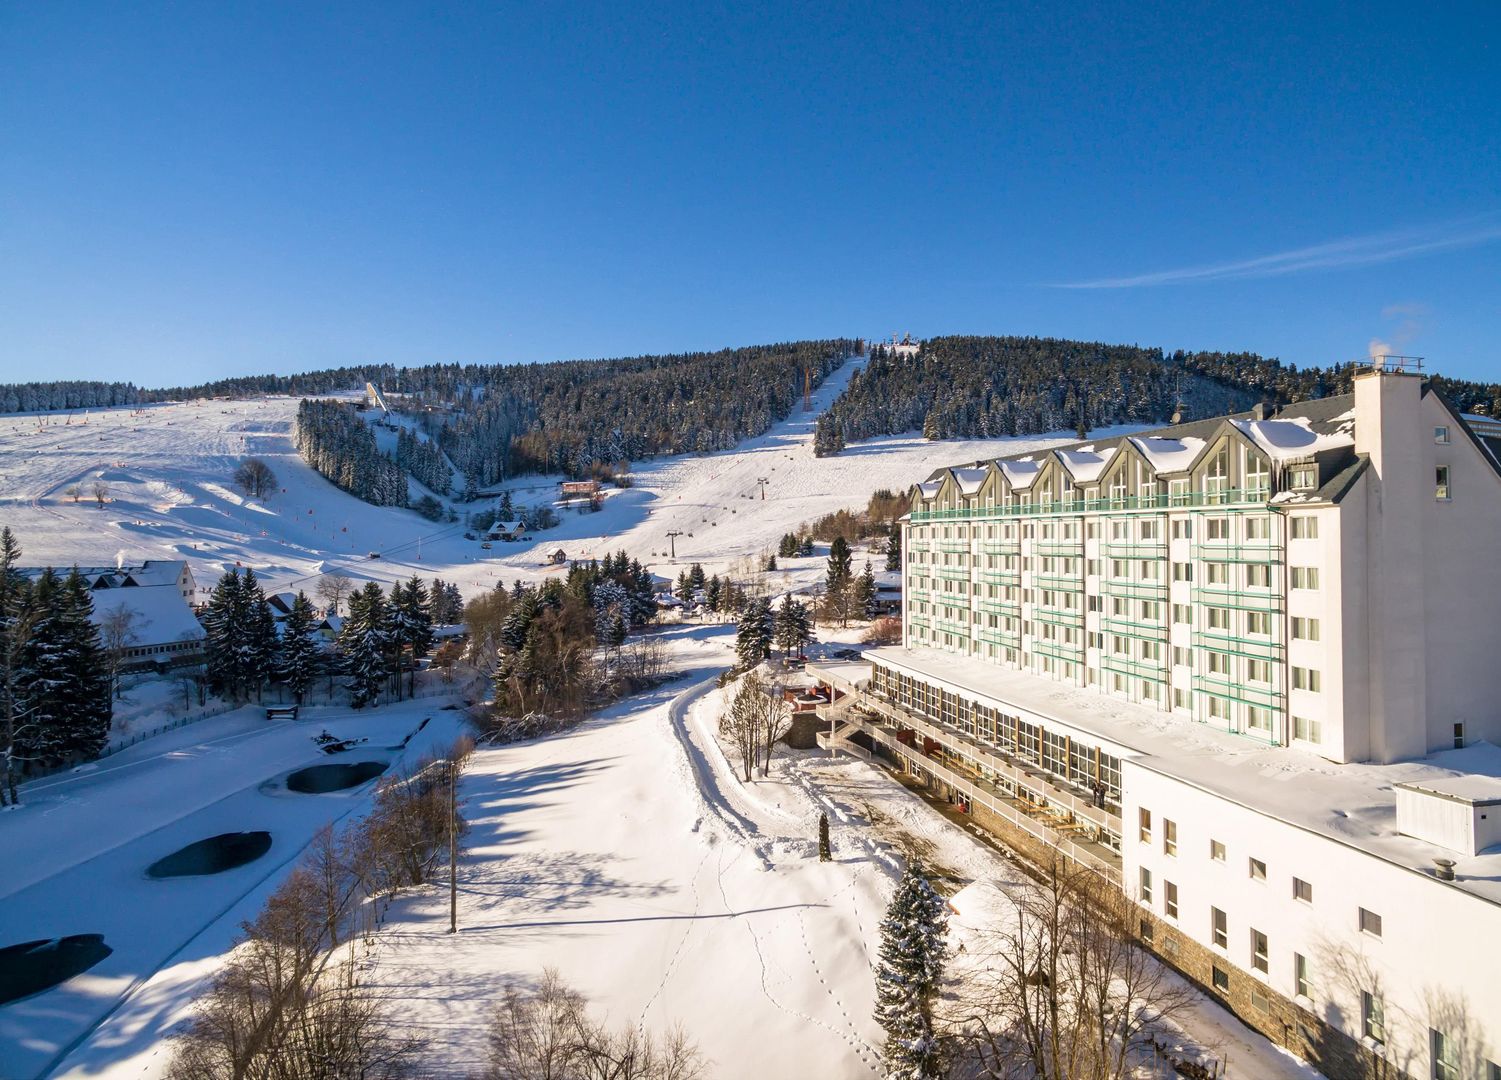 Meer info over BEST WESTERN Ahorn Hotel Oberwiesenthal (Adults Only)  bij Wintertrex